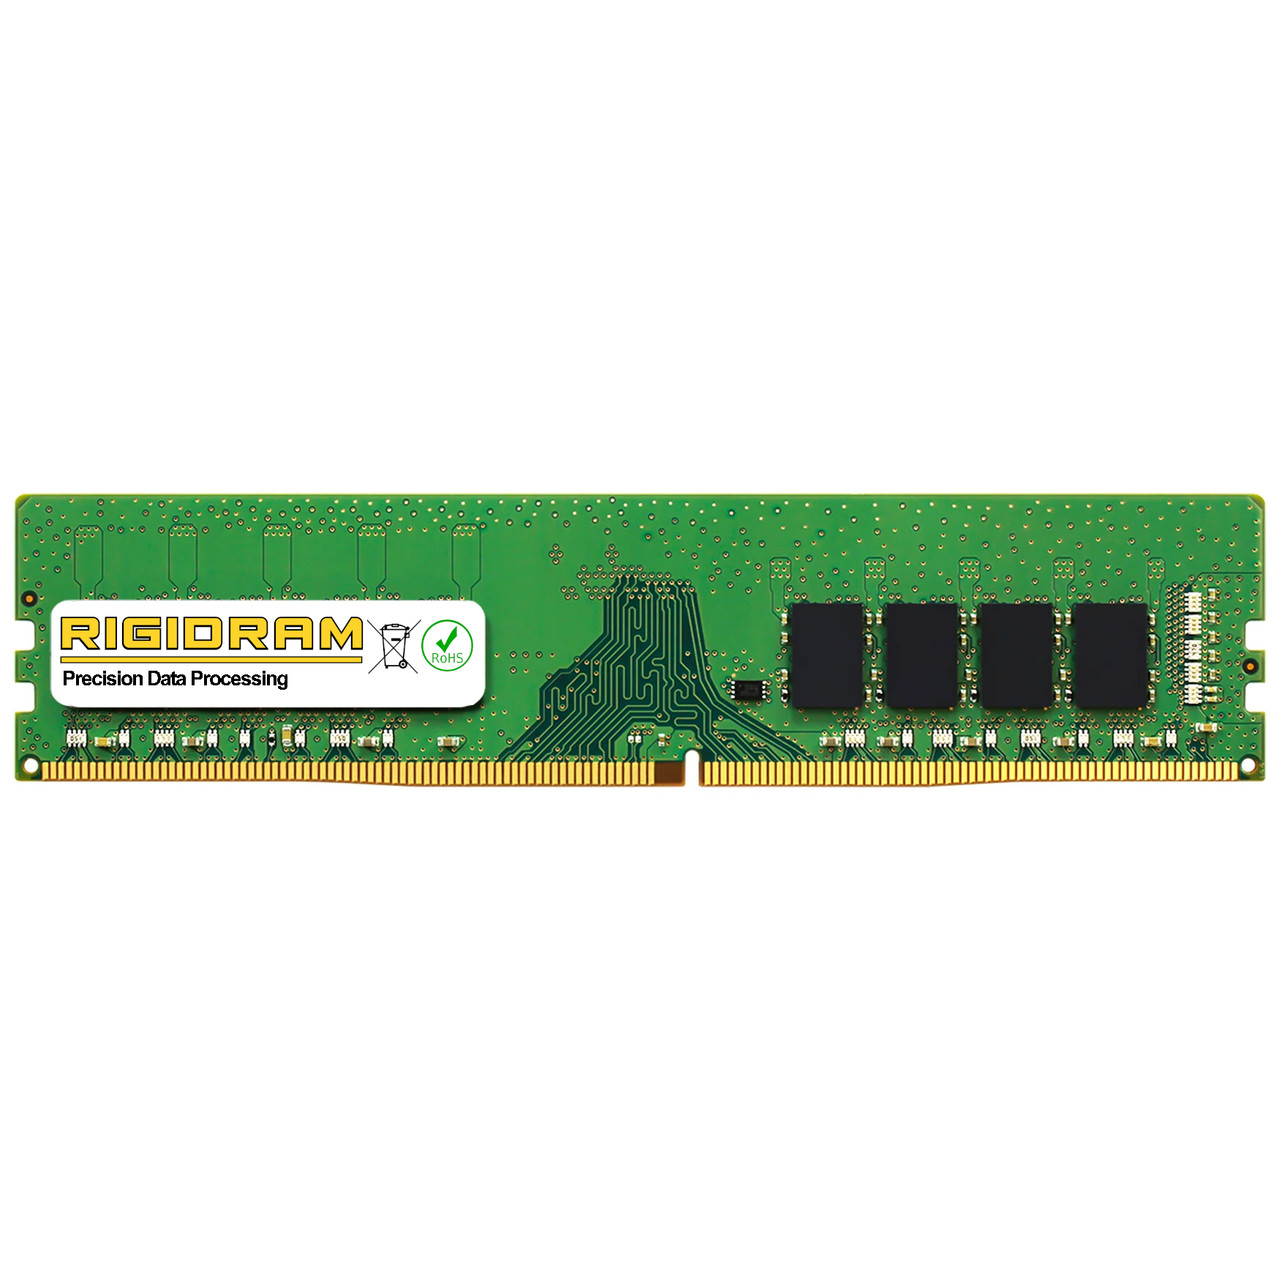 eBay*16GB 288-pin RigidRAM DDR4-2933 PC4-23400 UDIMM (2Rx8) Memory